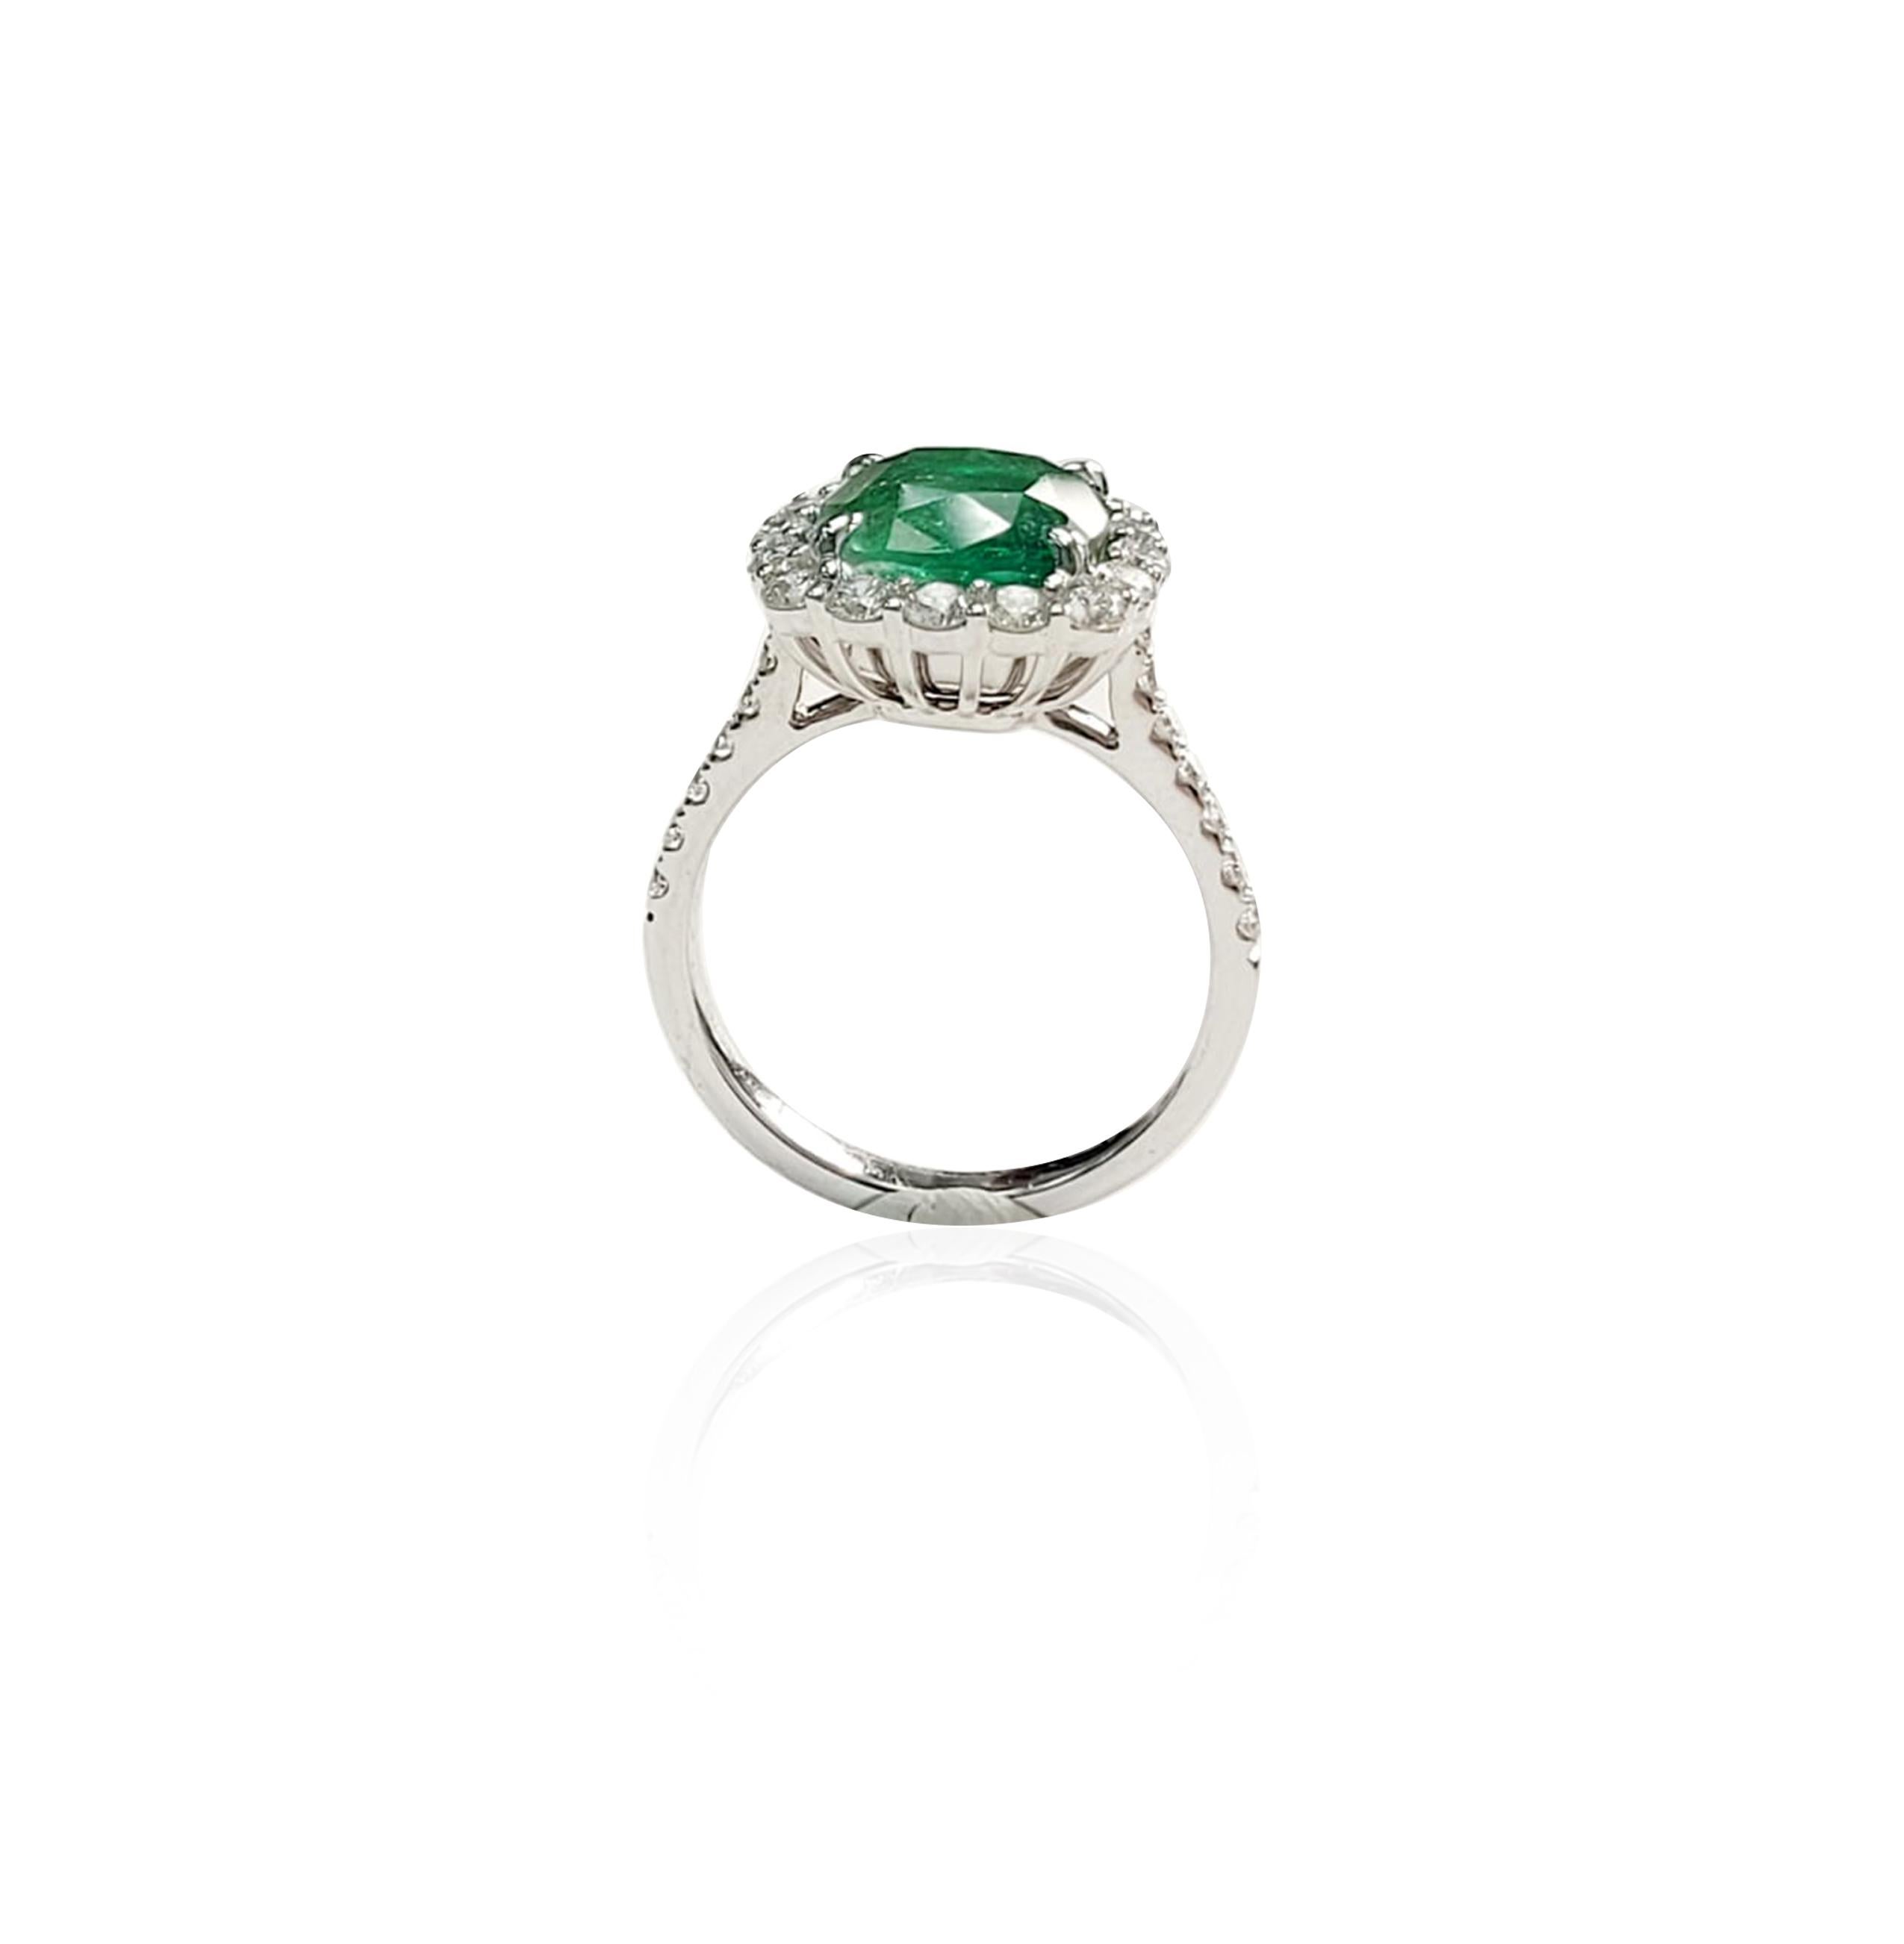 Emerald Cushion Cut - 3.58ct, 9.5mm
White Diamonds - 0.96ct
Metal Ring - 18k White Gold